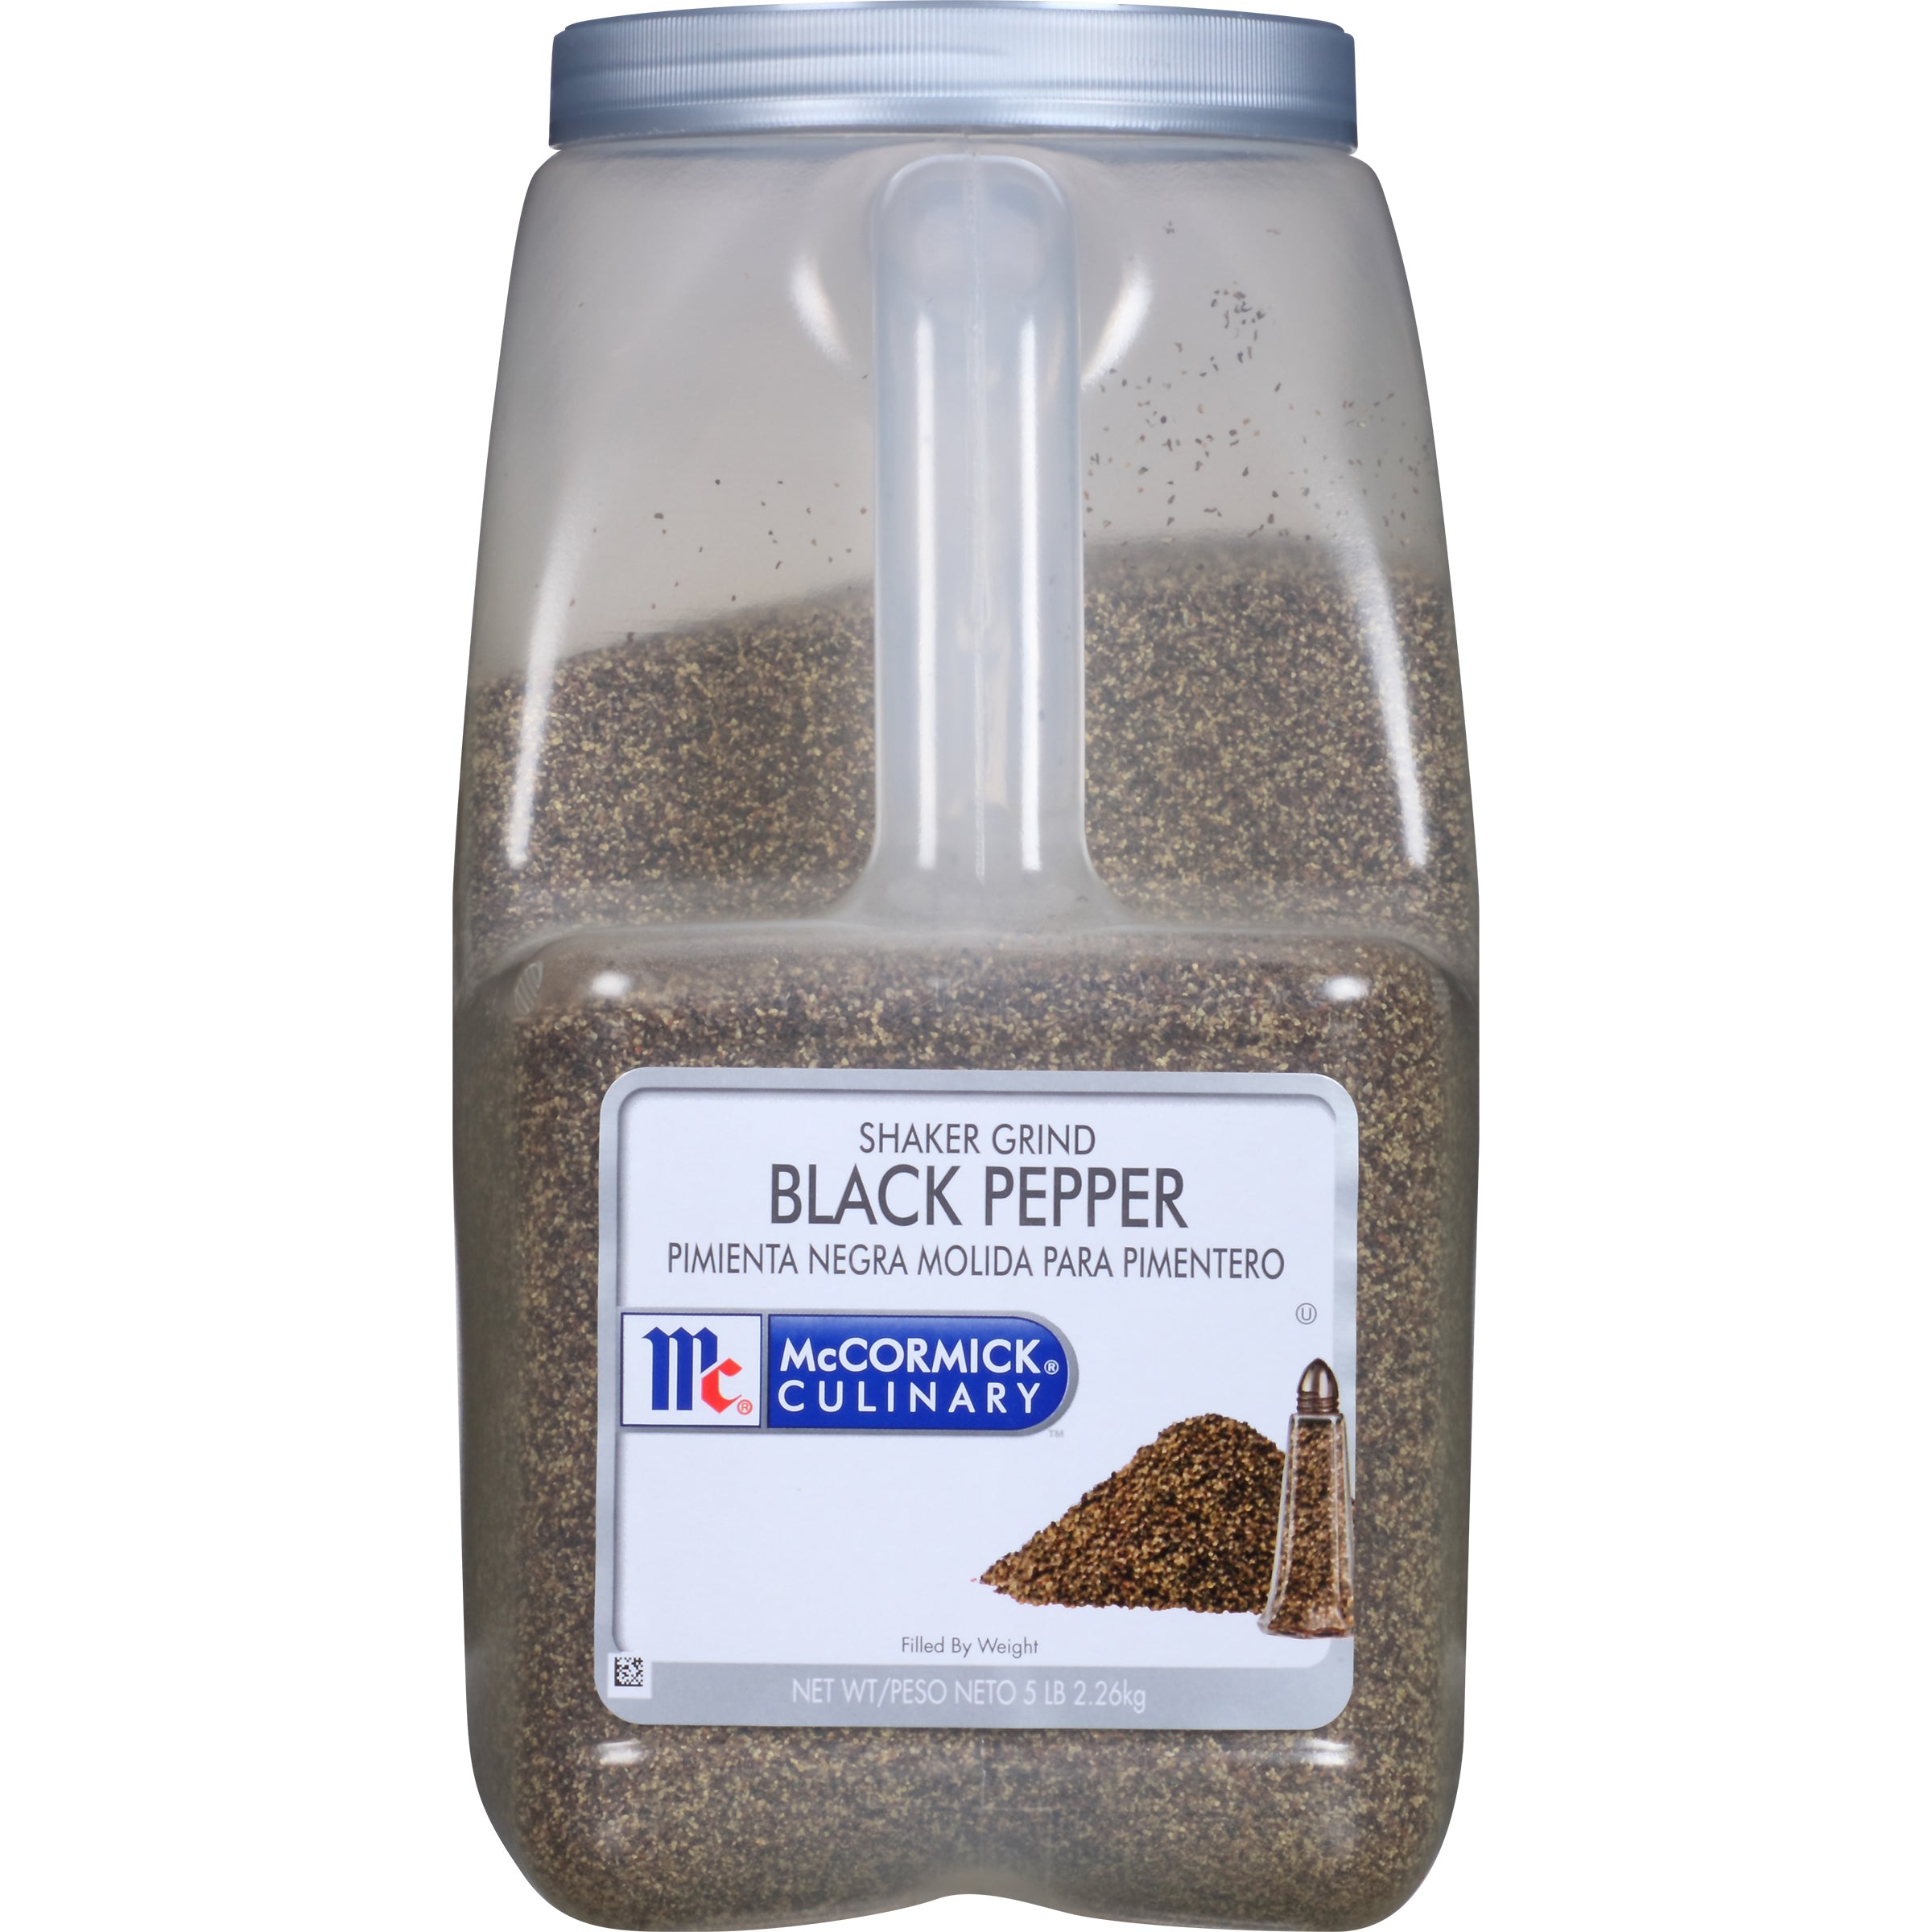 McCormick Black Peppercorn Grinder - 1.24 oz. jar, 36 per case